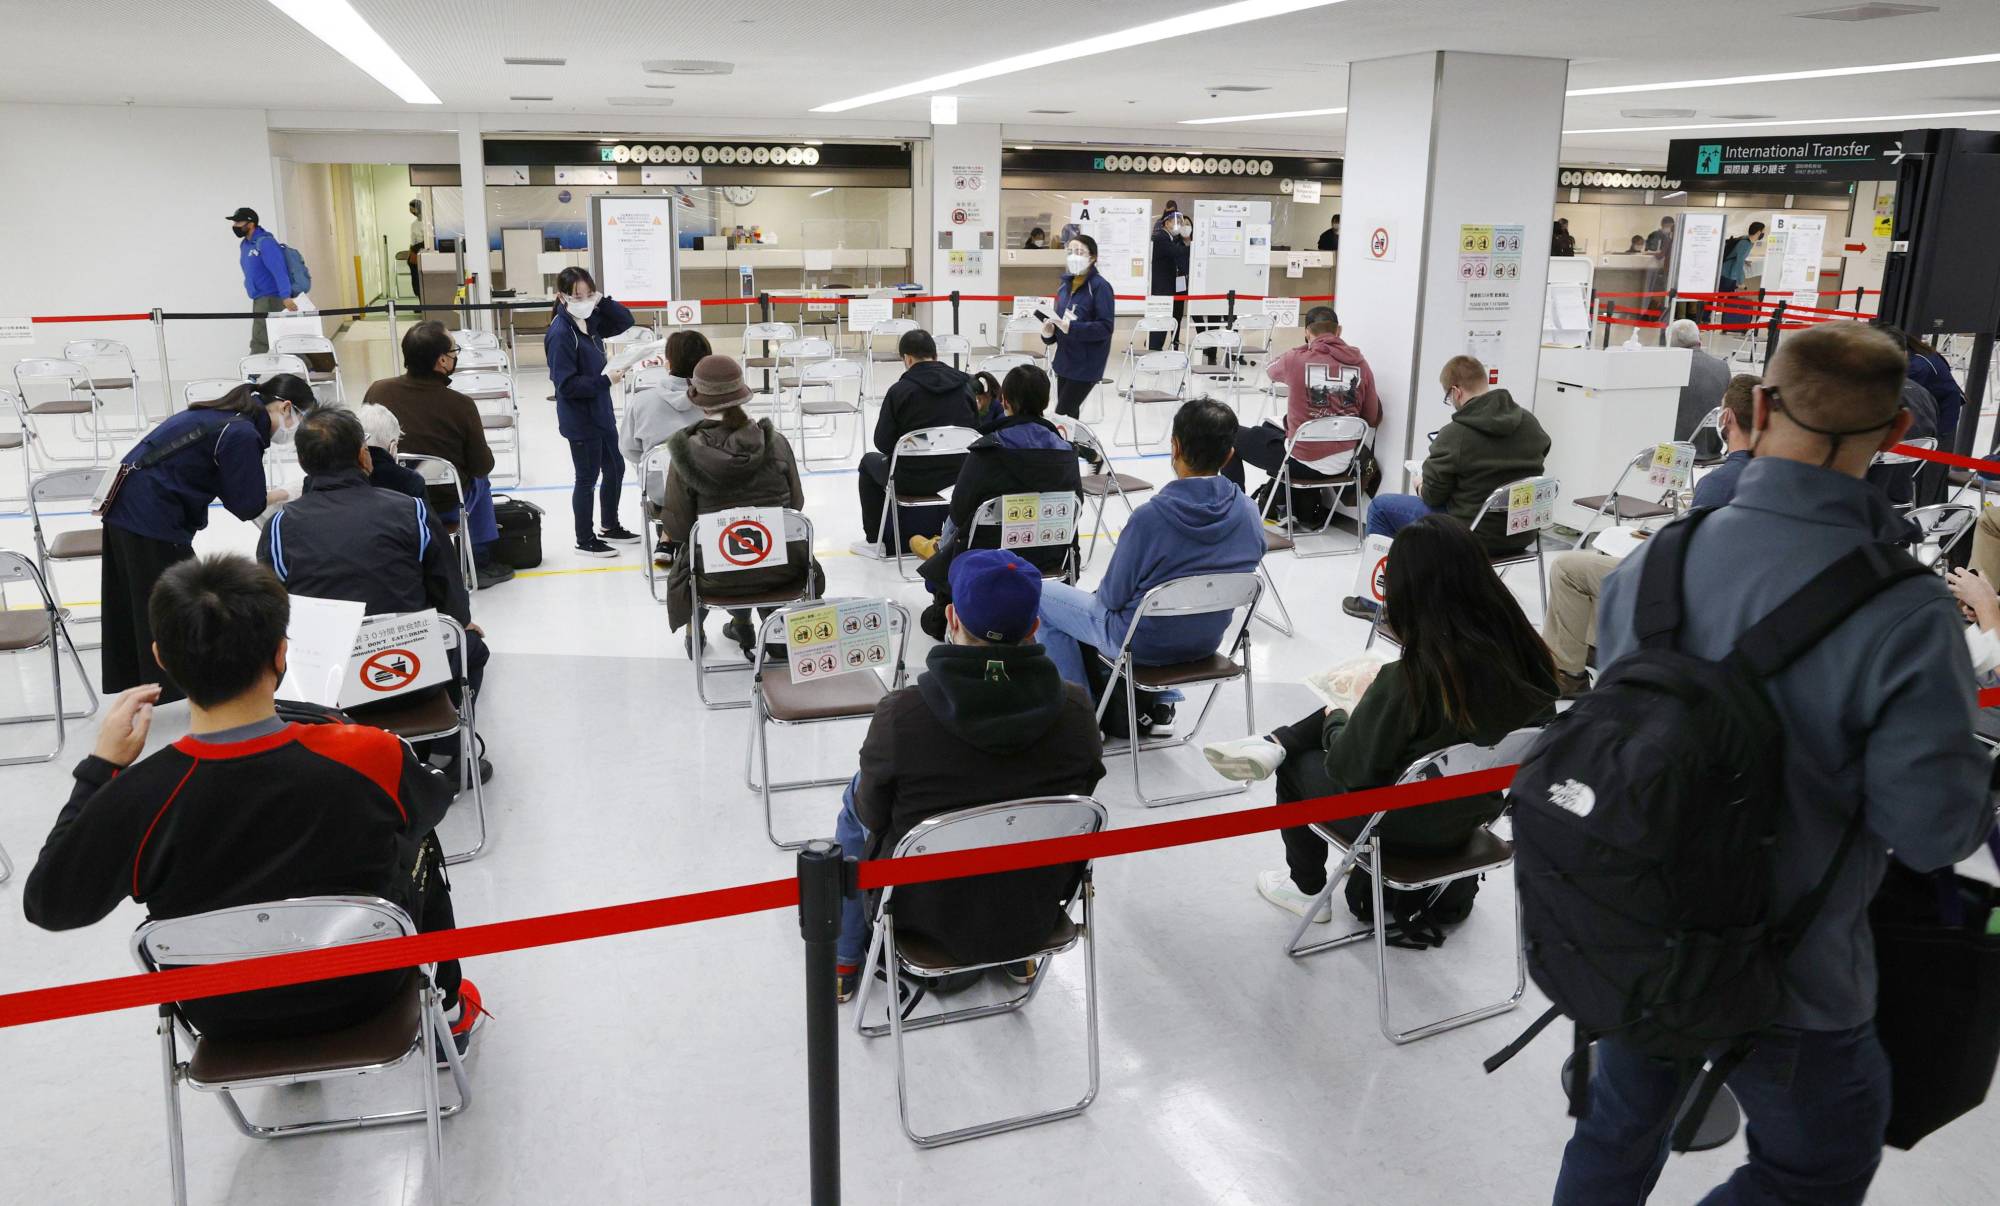 New arrivals go through entry procedures at Narita Airport on Nov. 29. | KYODO